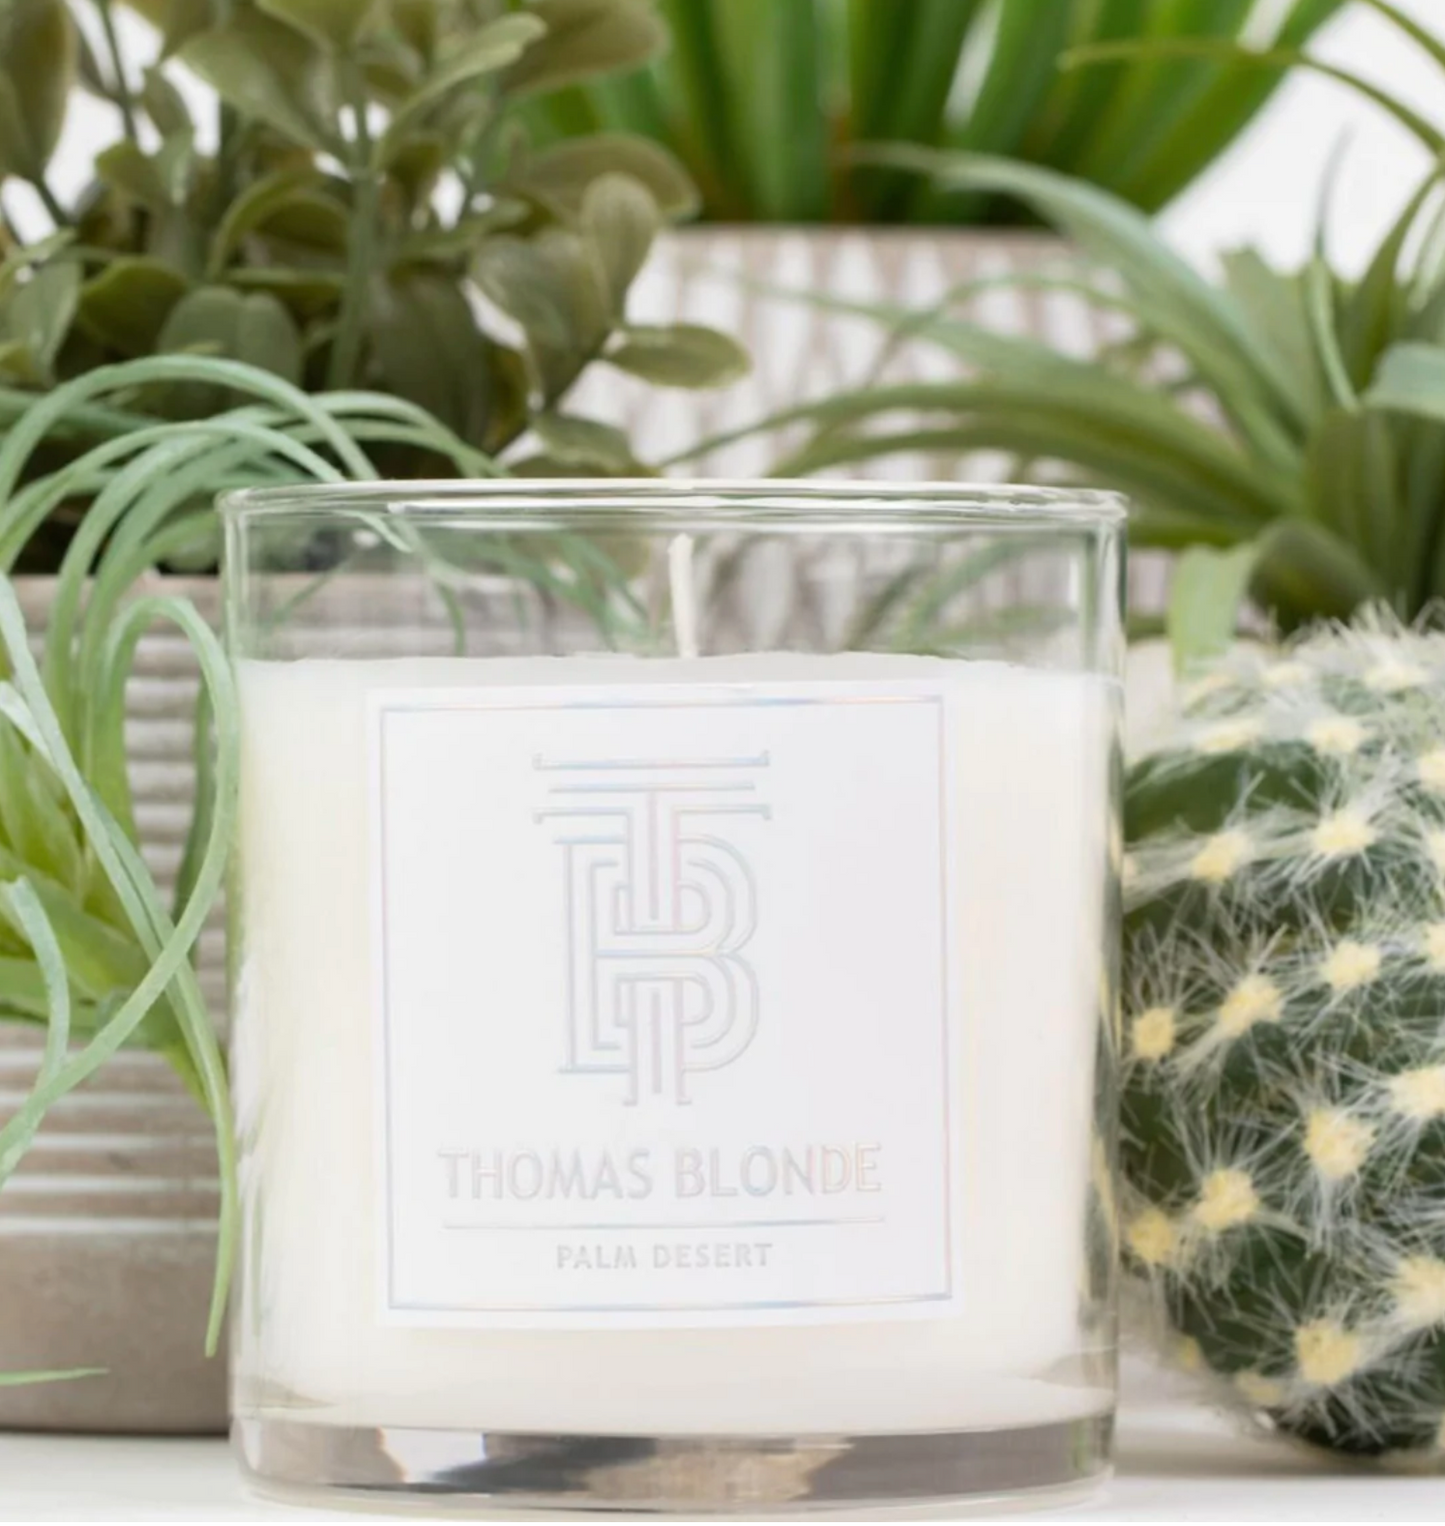 Thomas Blonde Palm Desert Candle